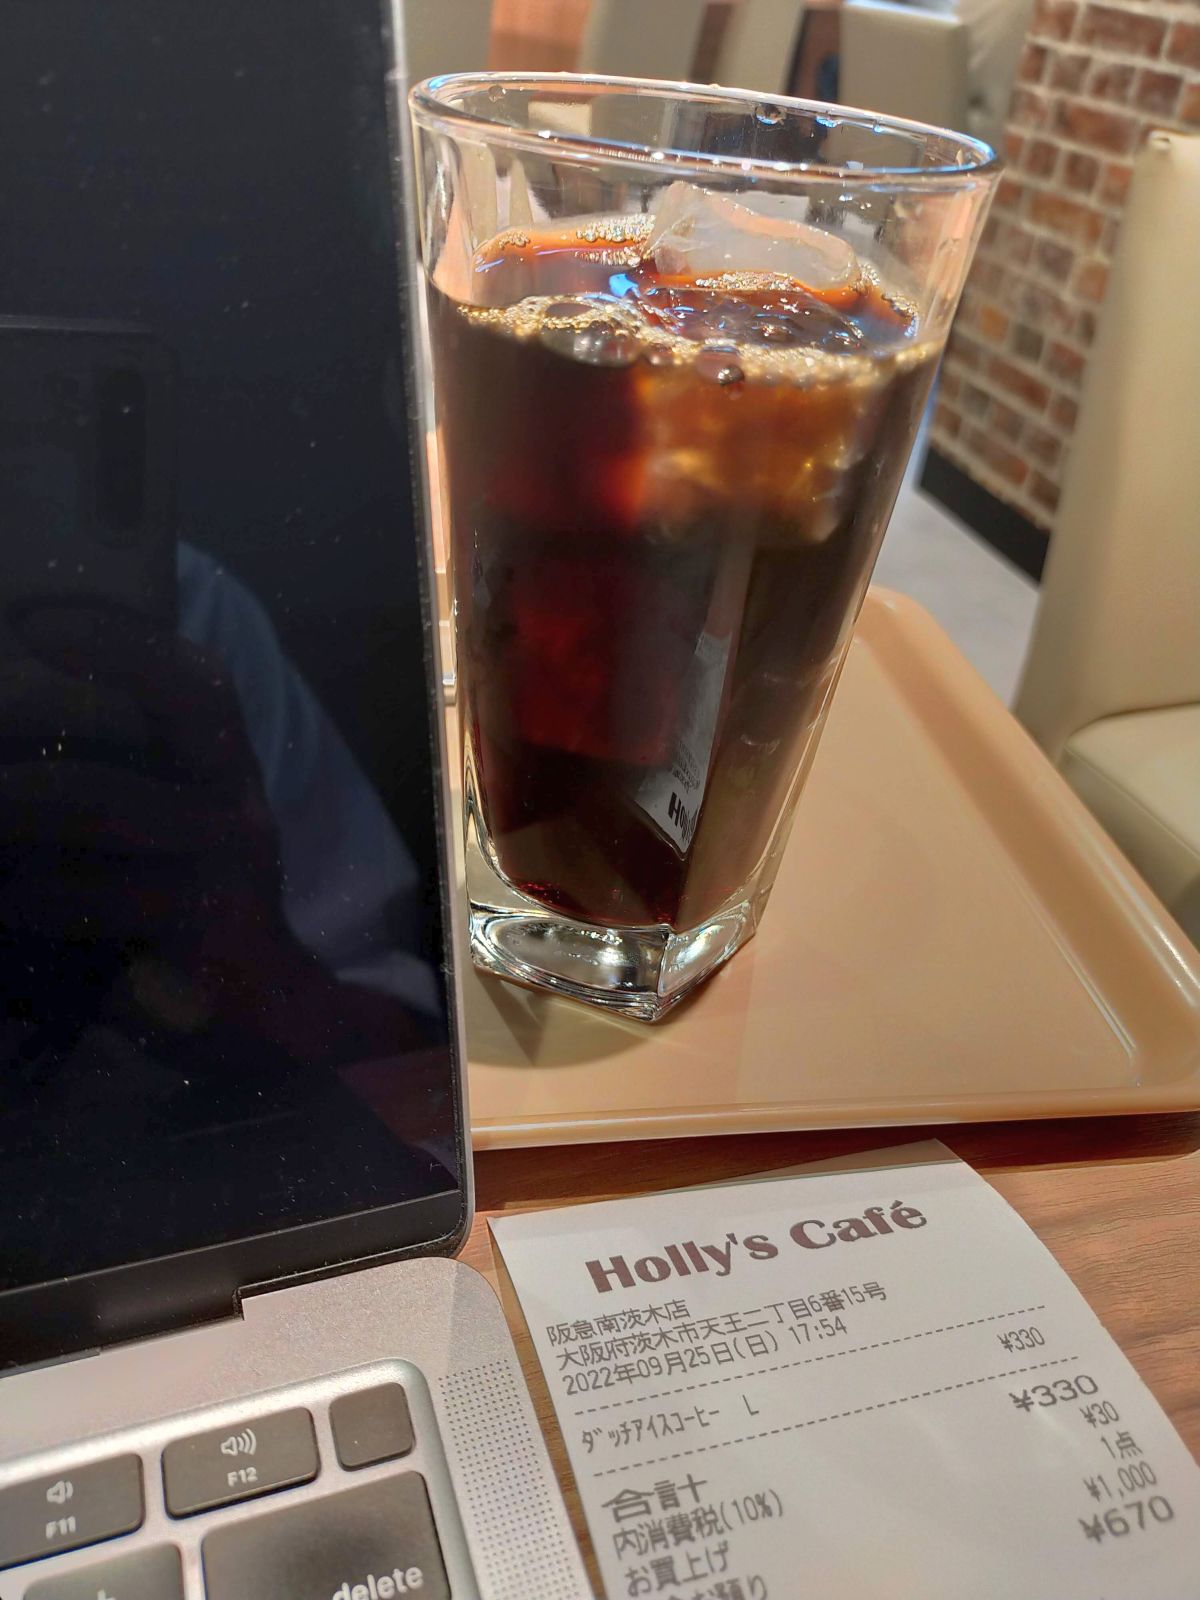 Holly’s Cafe